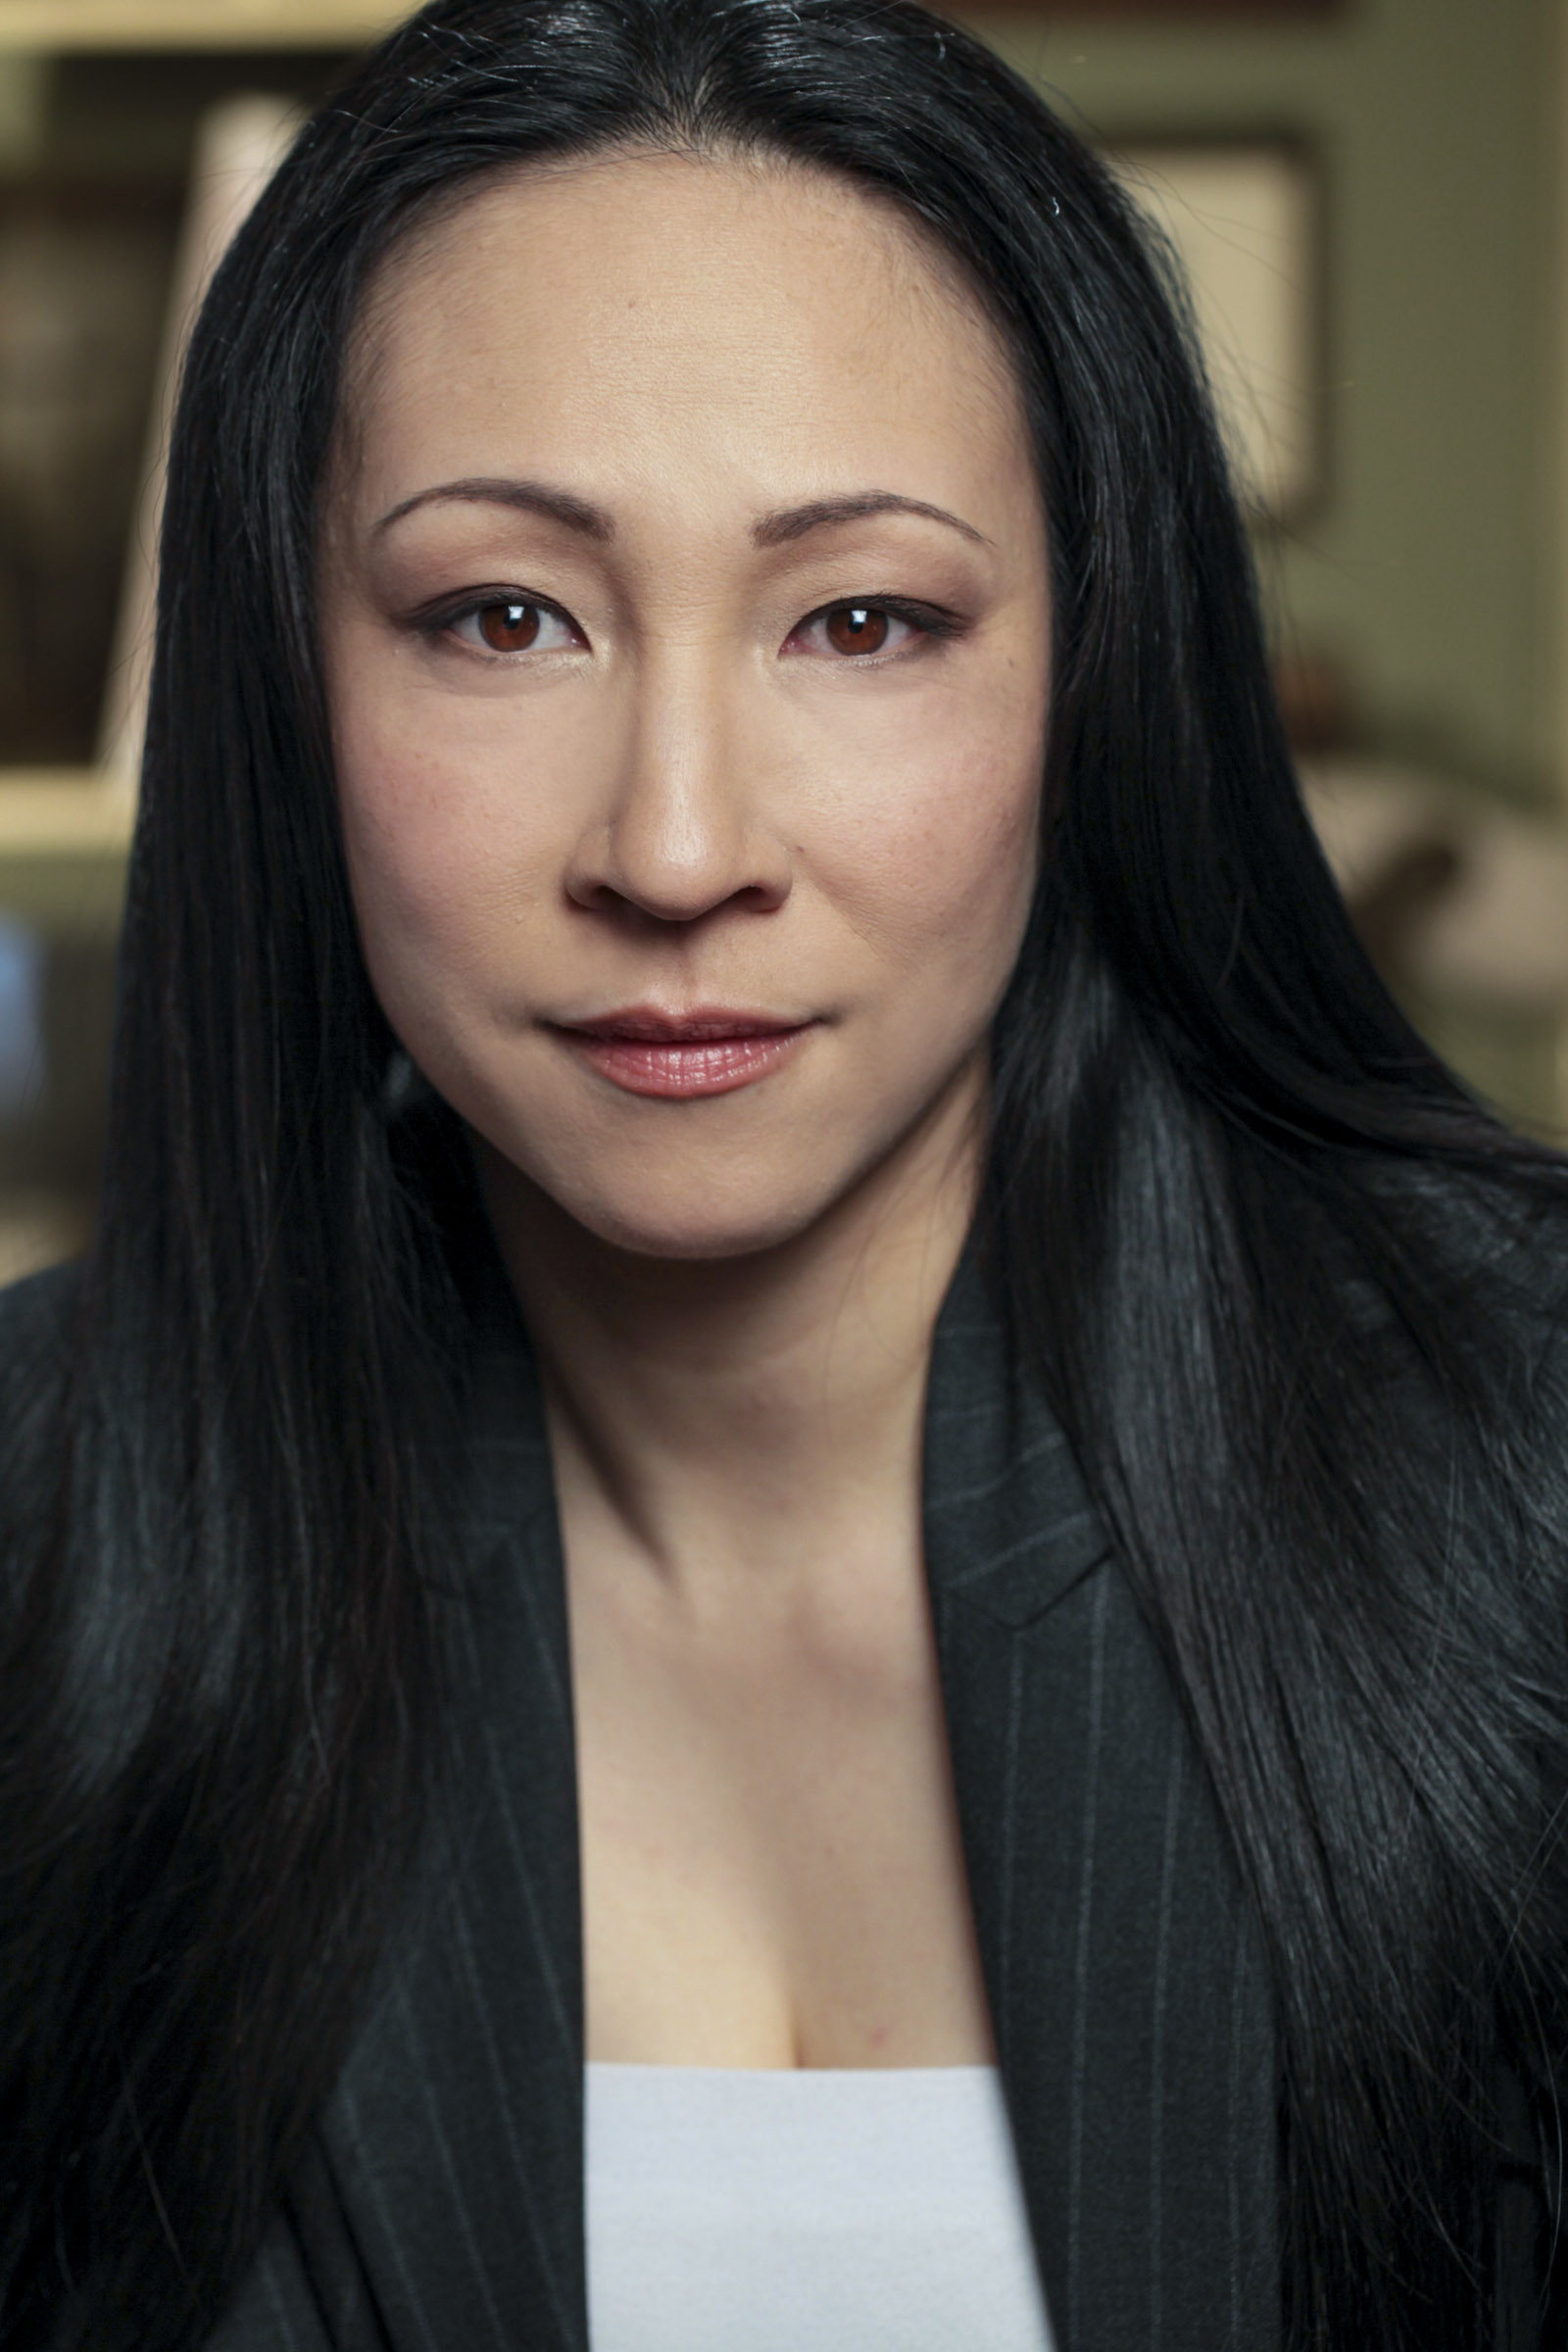 Ms. Pi, CEO Portrait, NYC executive Headshot by Tess Steinkolk, NYC CEO Portrait Photographer